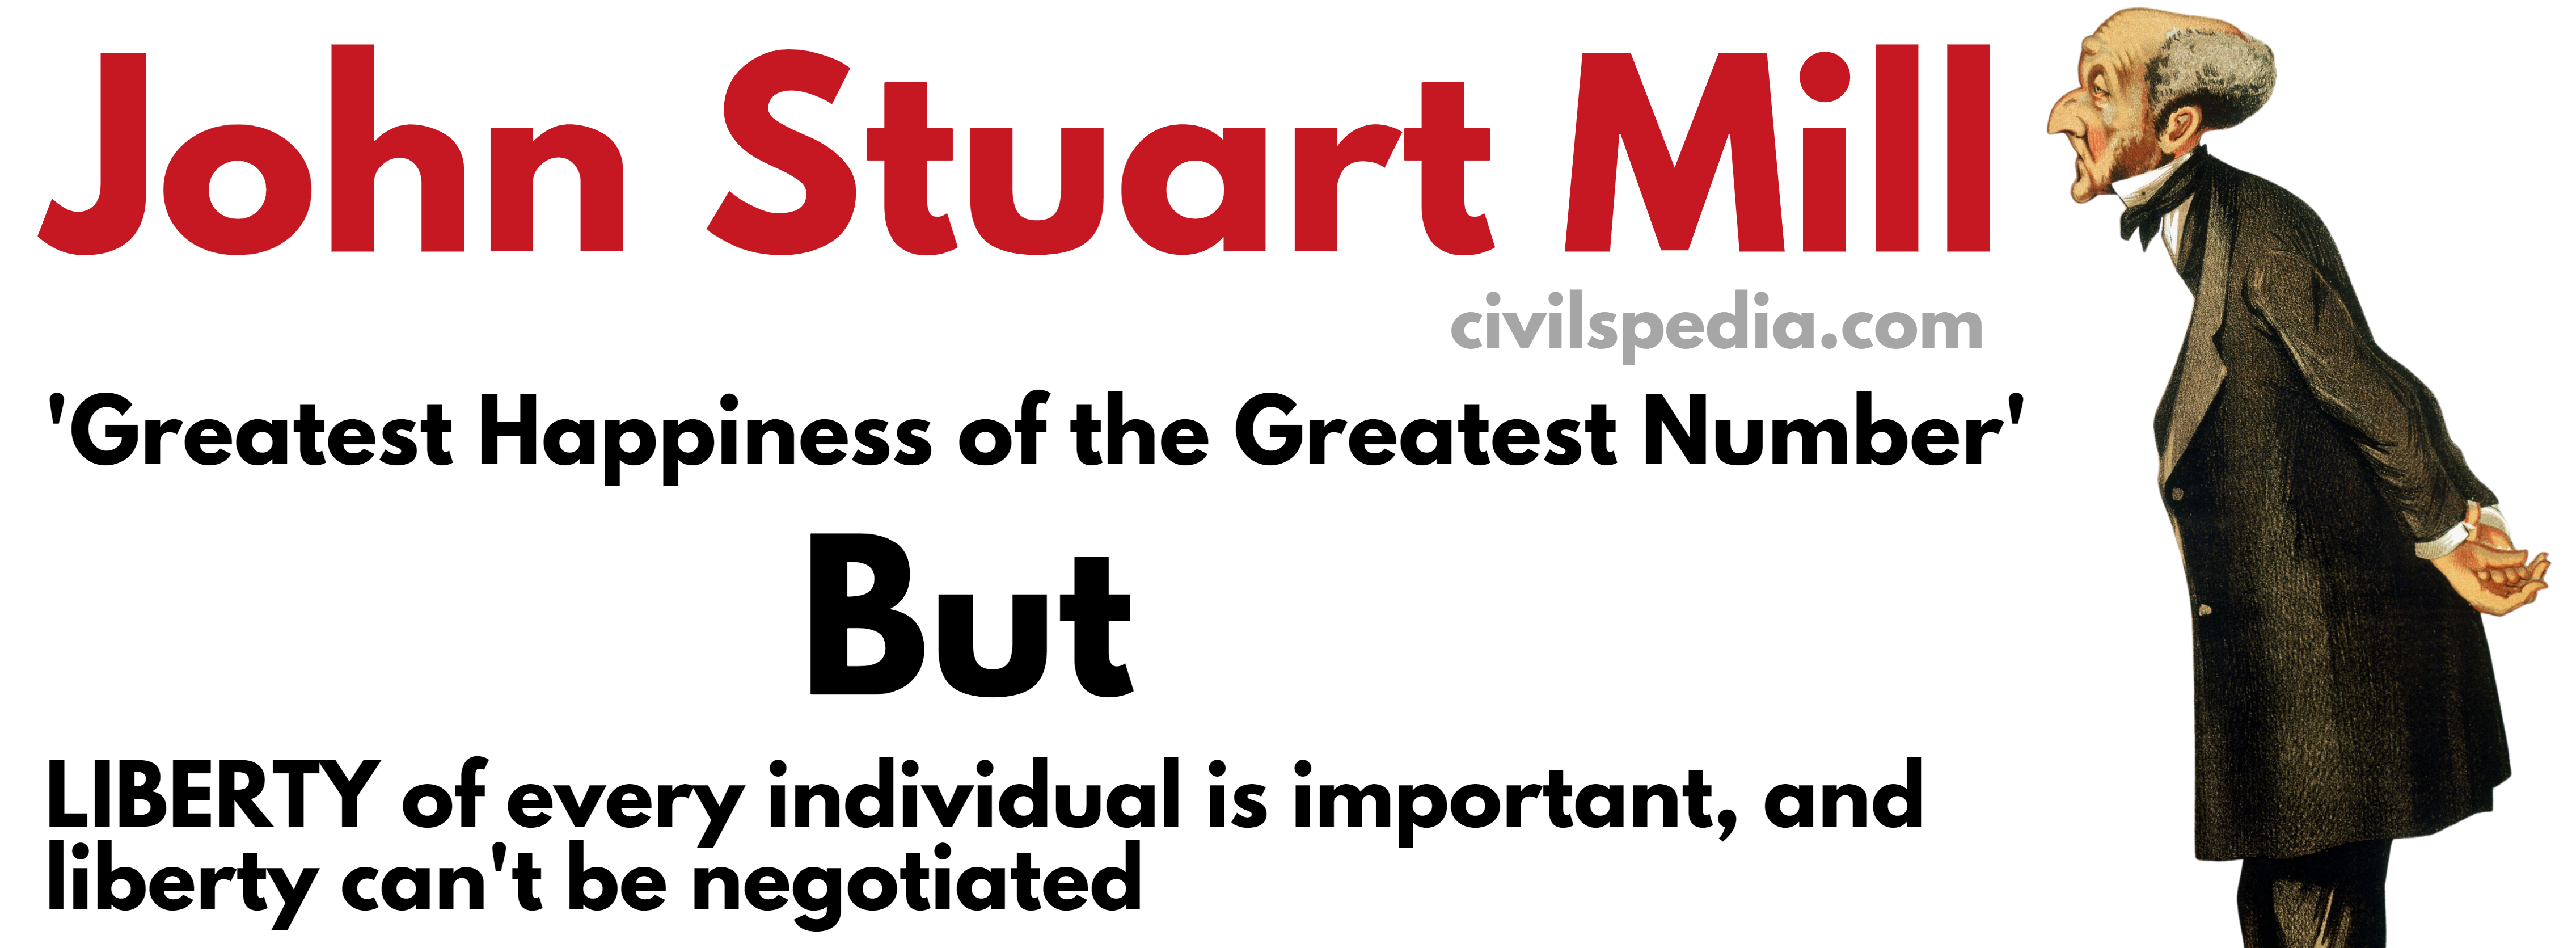 John Stuart Mill's Refined Utilitarianism  